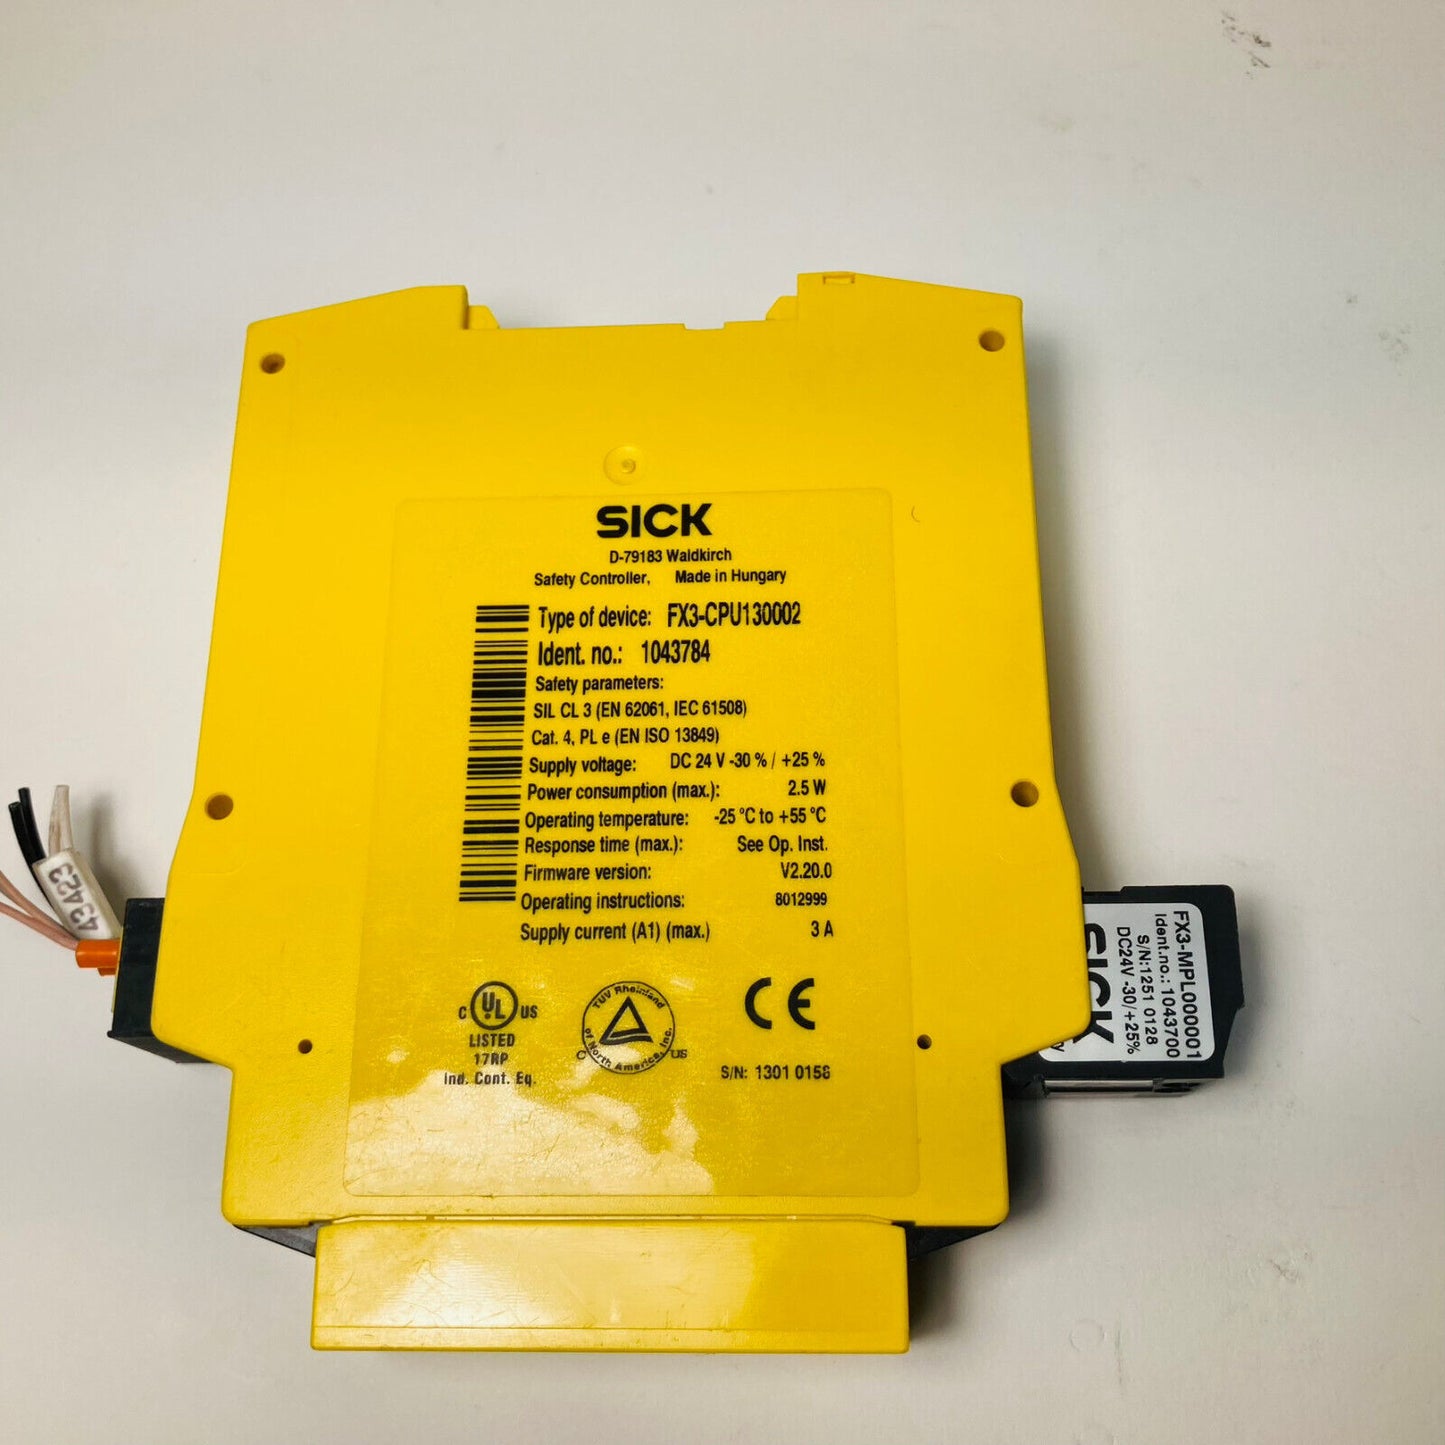 Sick FX3-CPU130002 Safety Controller 1043784